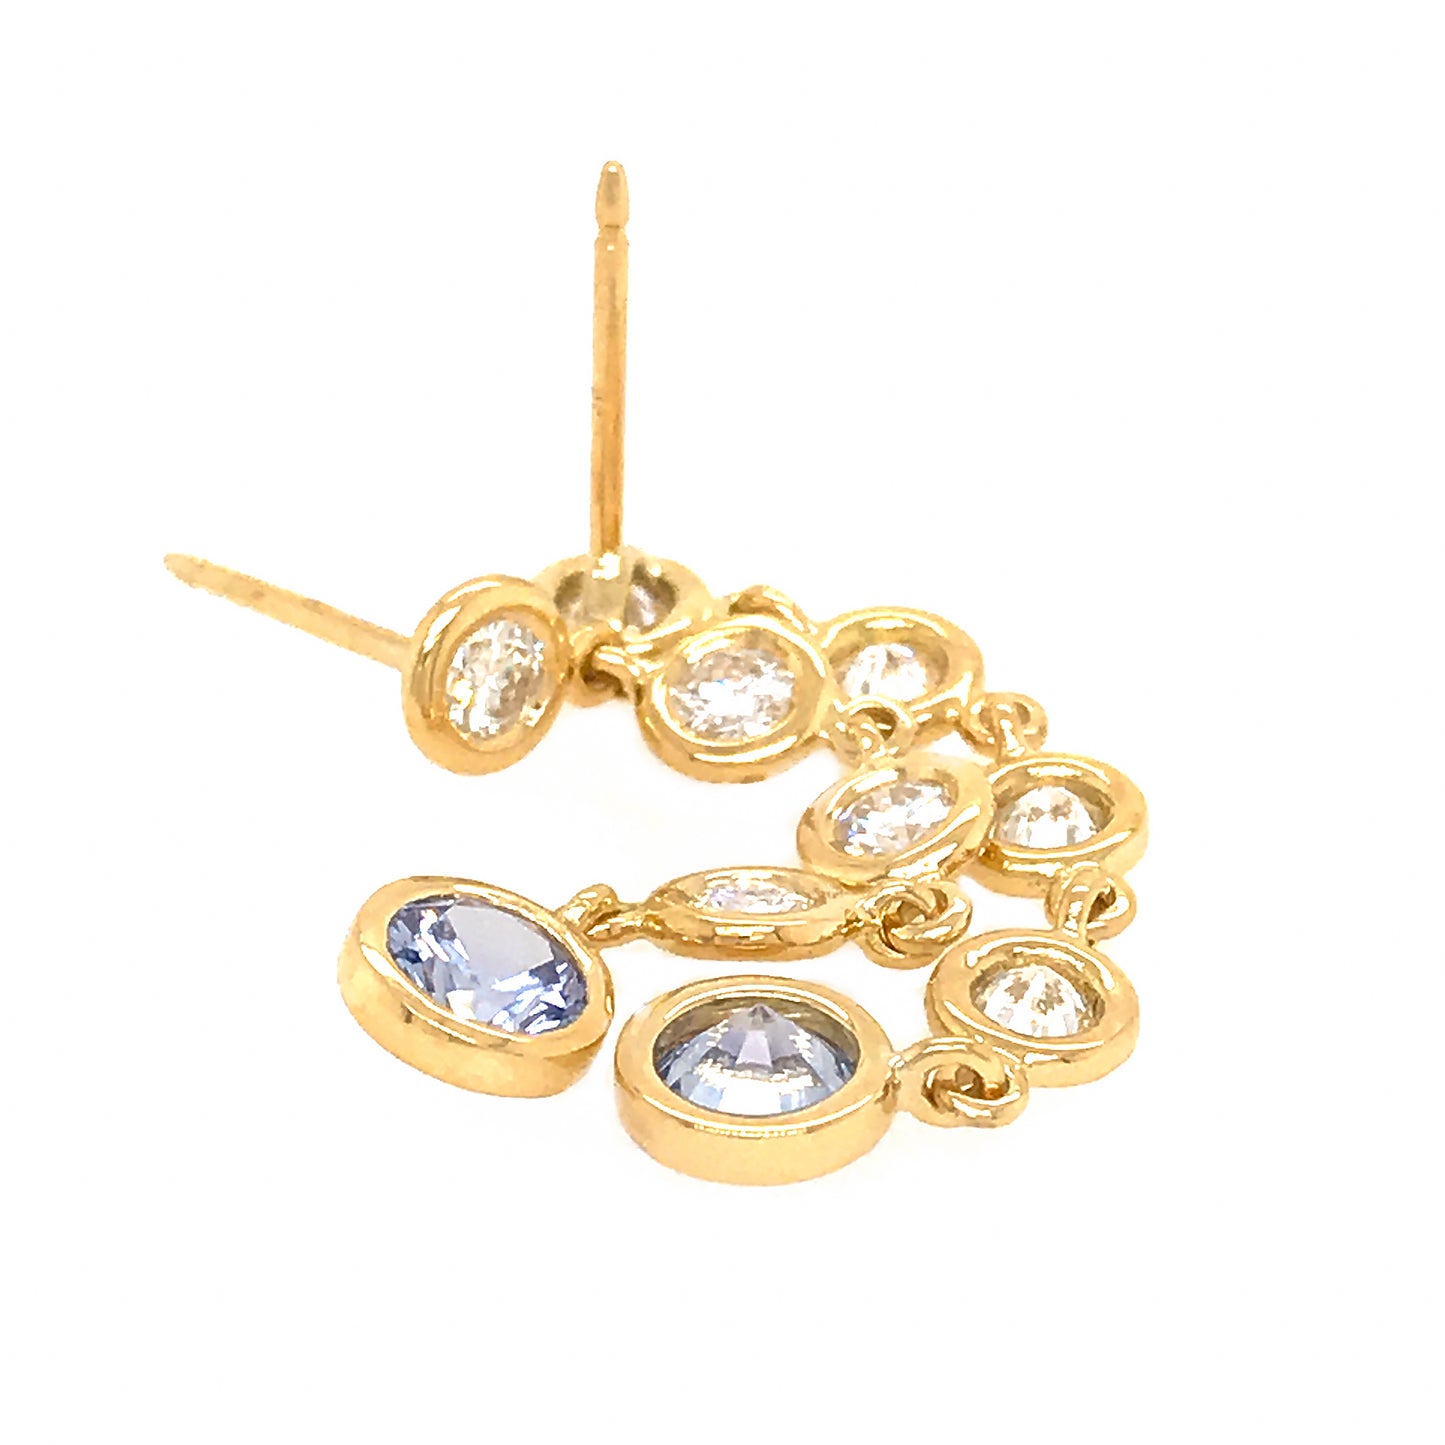 FAB DROPS 18K Yellow Gold Diamond and Light Blue Ceylon Sapphire Drop Earrings